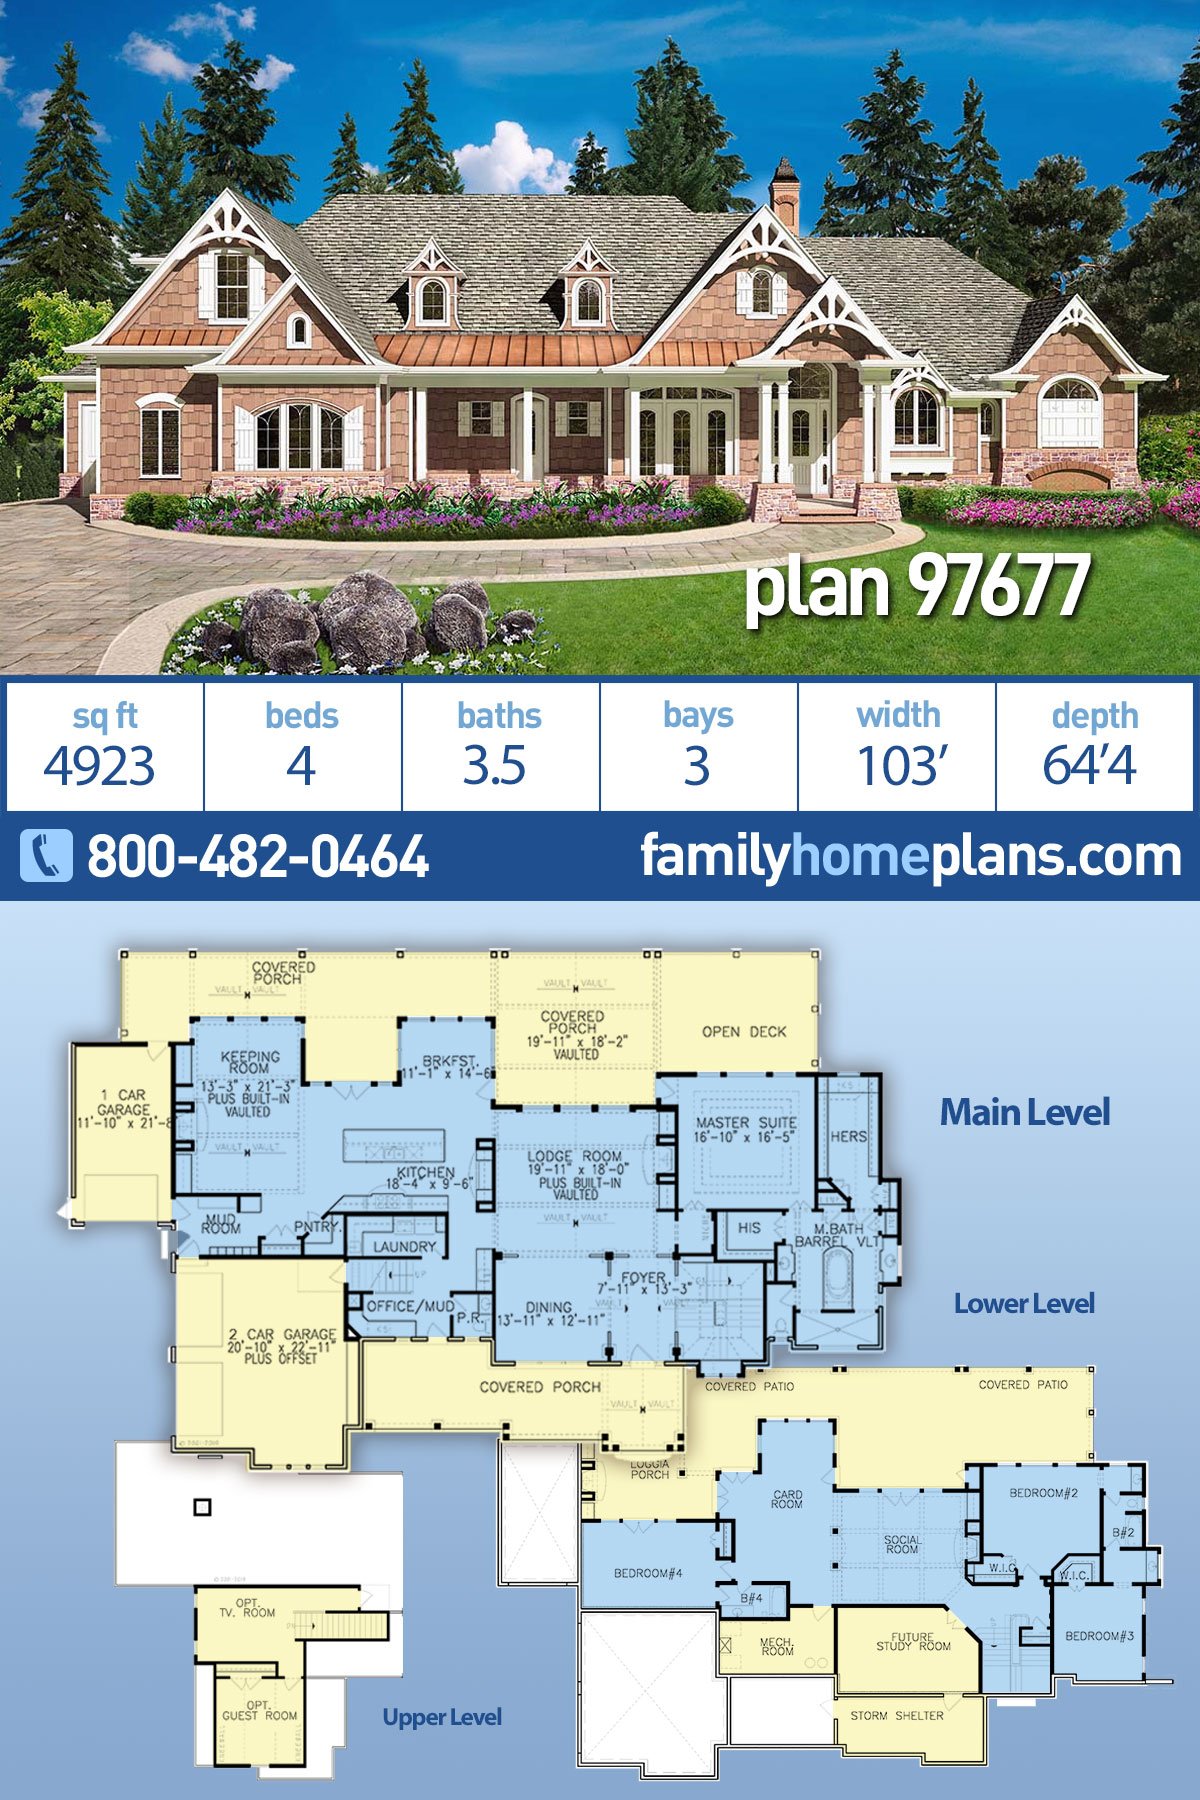 House Plan 97677